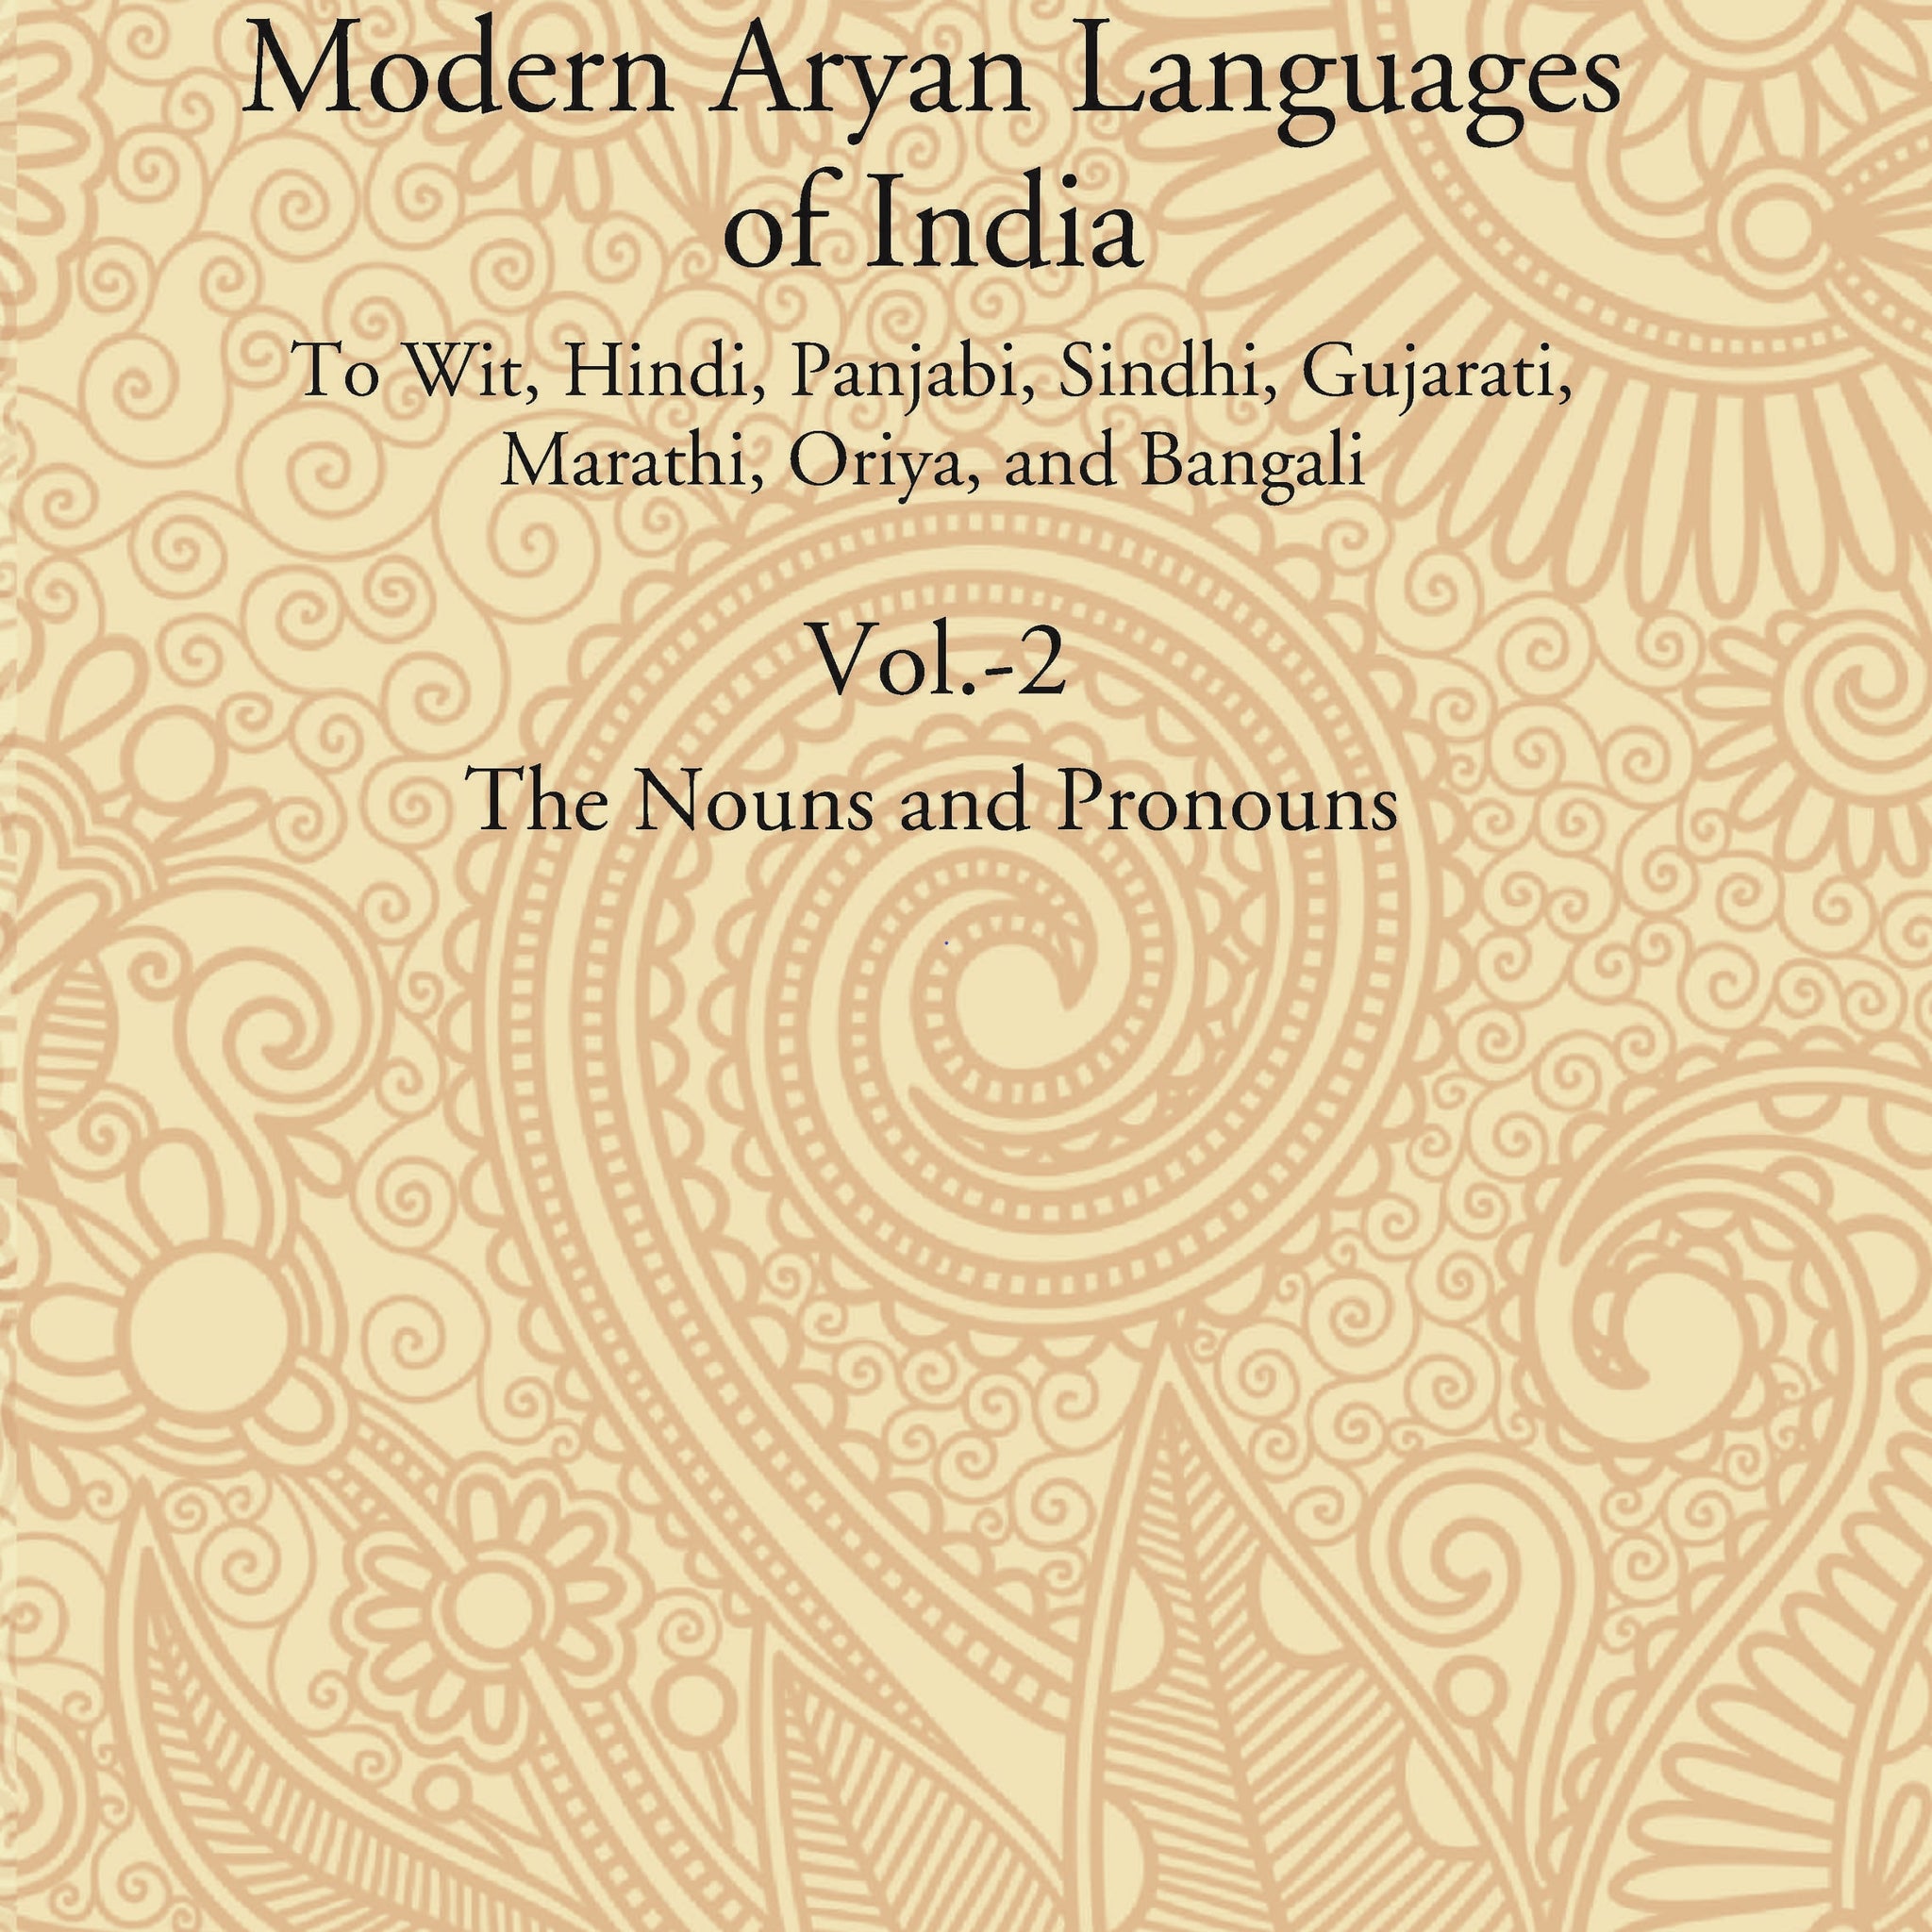 A Comparative Grammar of the Modern Aryan Languages of India: To Wit, Hindi, Panjabi, Sindhi, Gujarati, Marathi, Oriya, and Bangali (The Noun and Pronoun) Volume 2nd